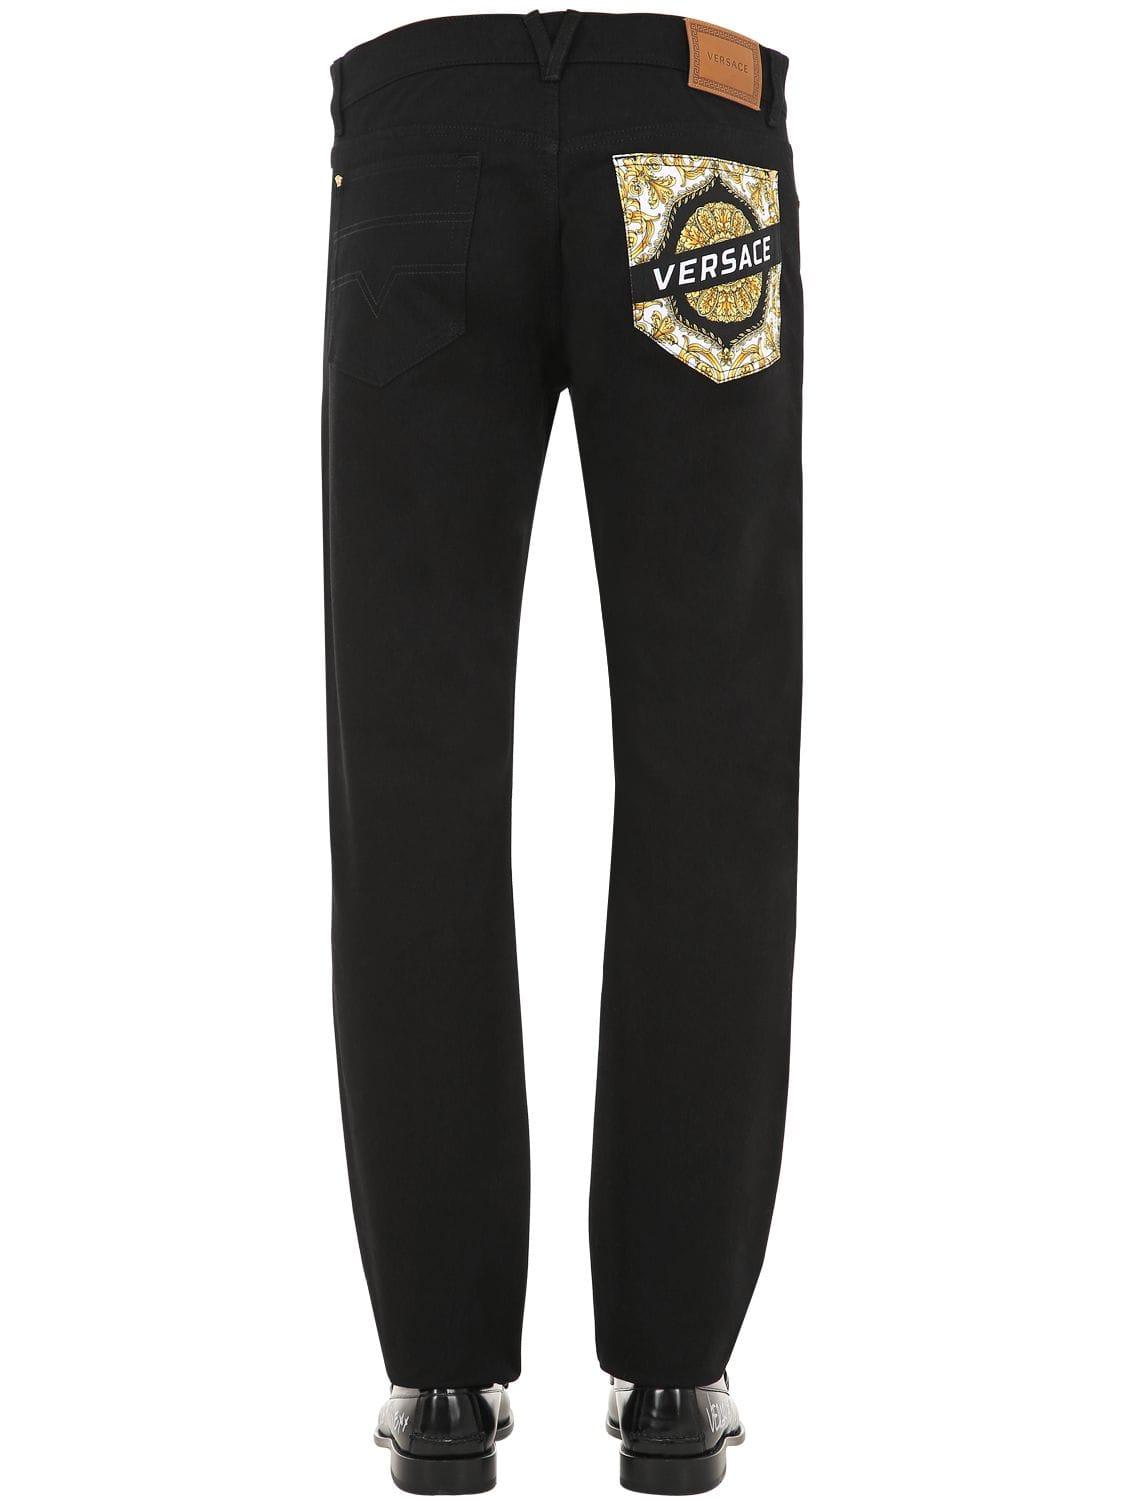 Lyst - Versace 17mm Logo Cotton Denim Jeans in Black for Men